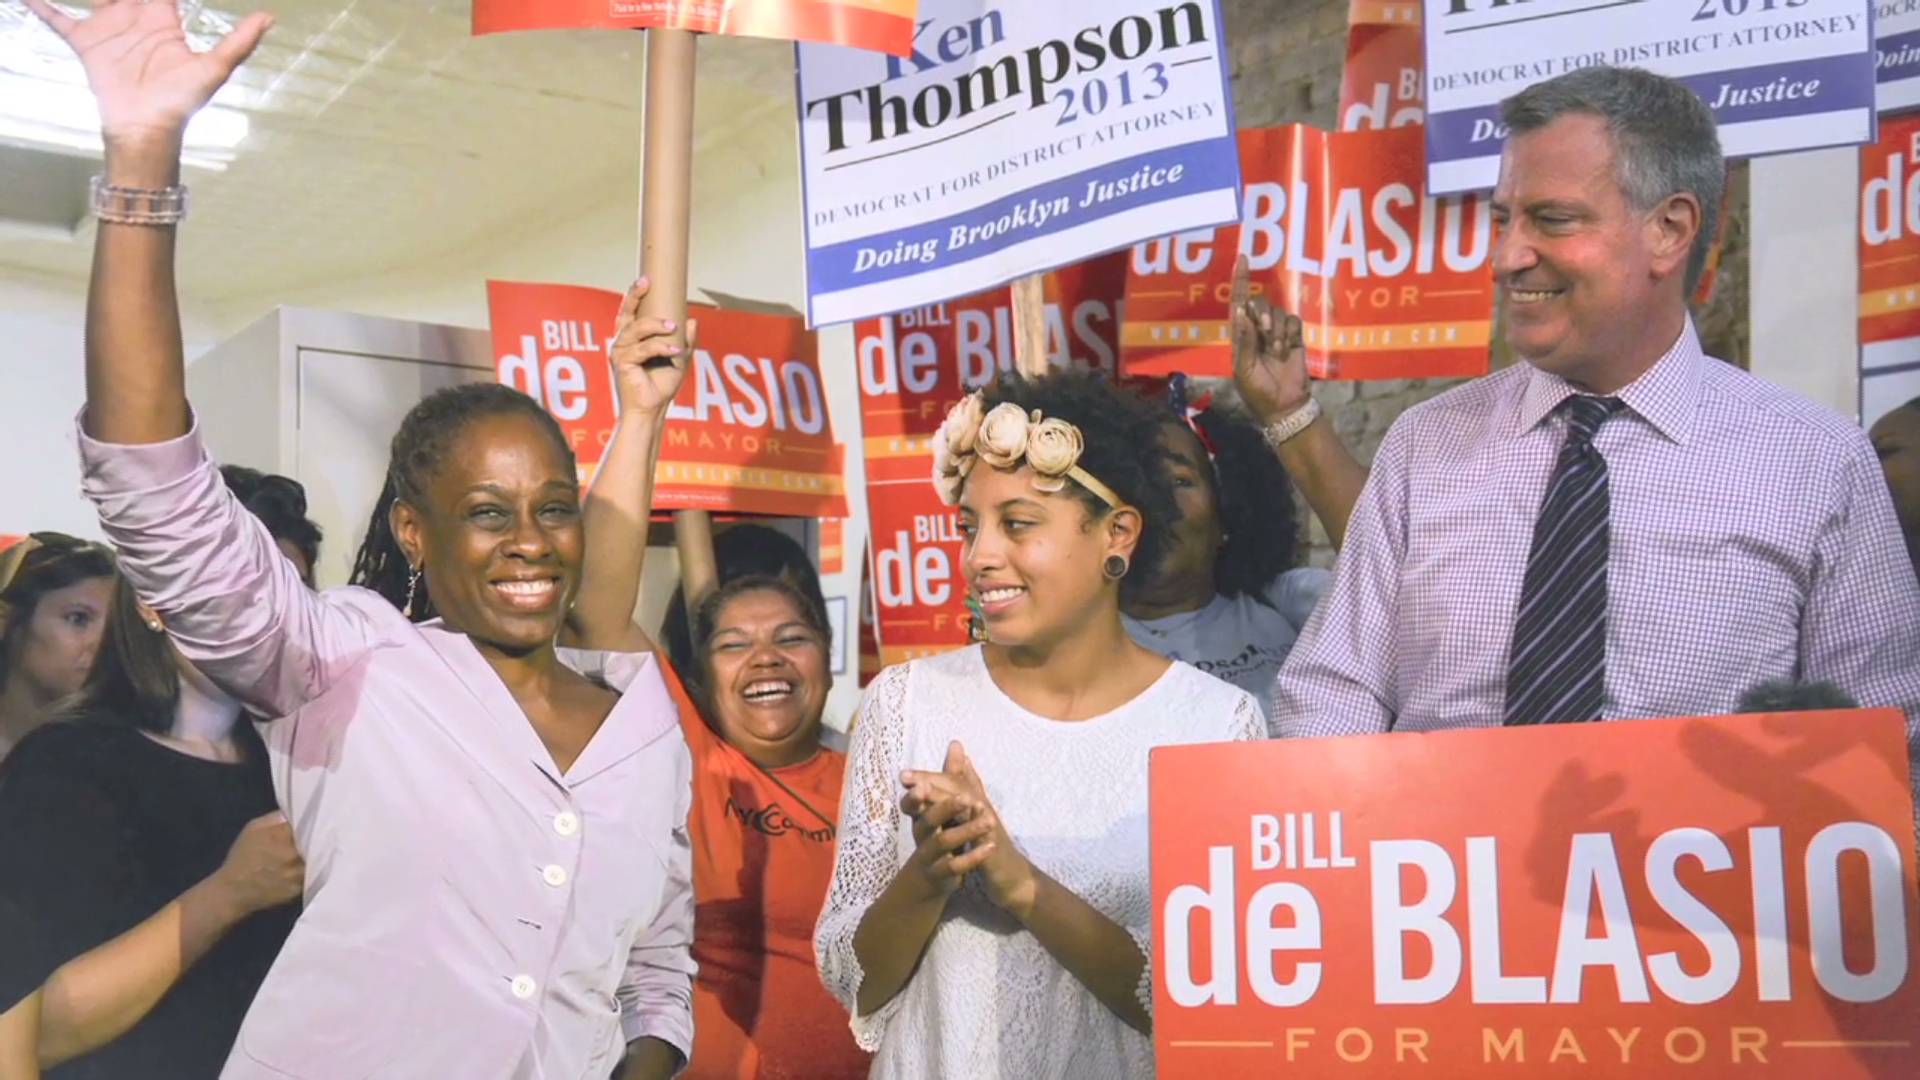 News, Is Bill de Blasio Leading a Racist Campaign?